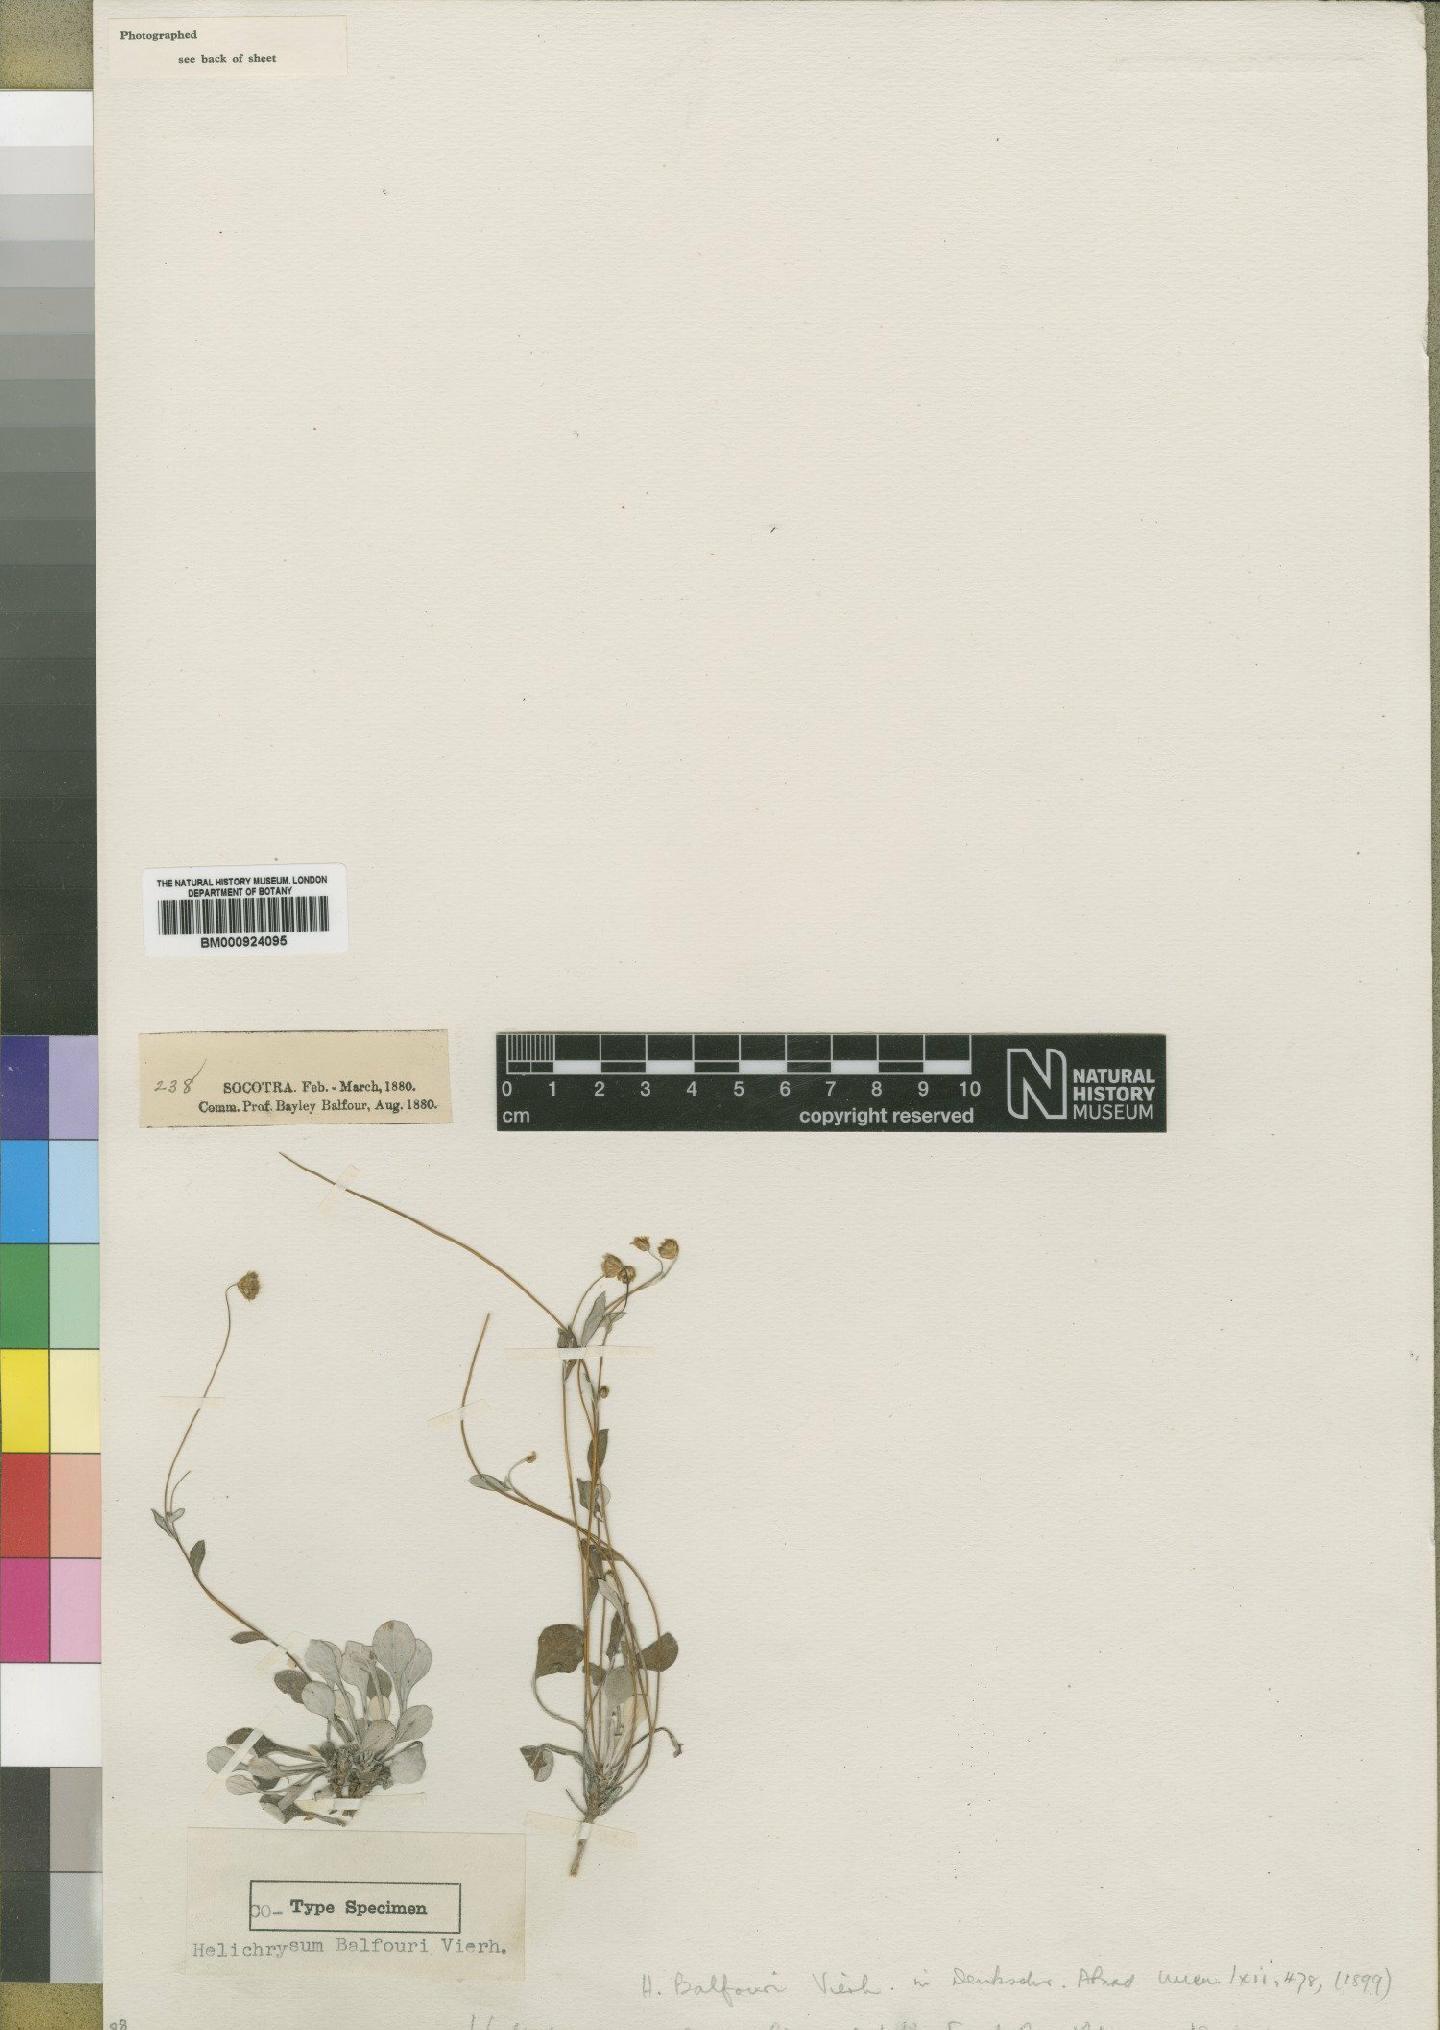 To NHMUK collection (Helichrysum balfourii Vierh; TYPE; NHMUK:ecatalogue:4529123)